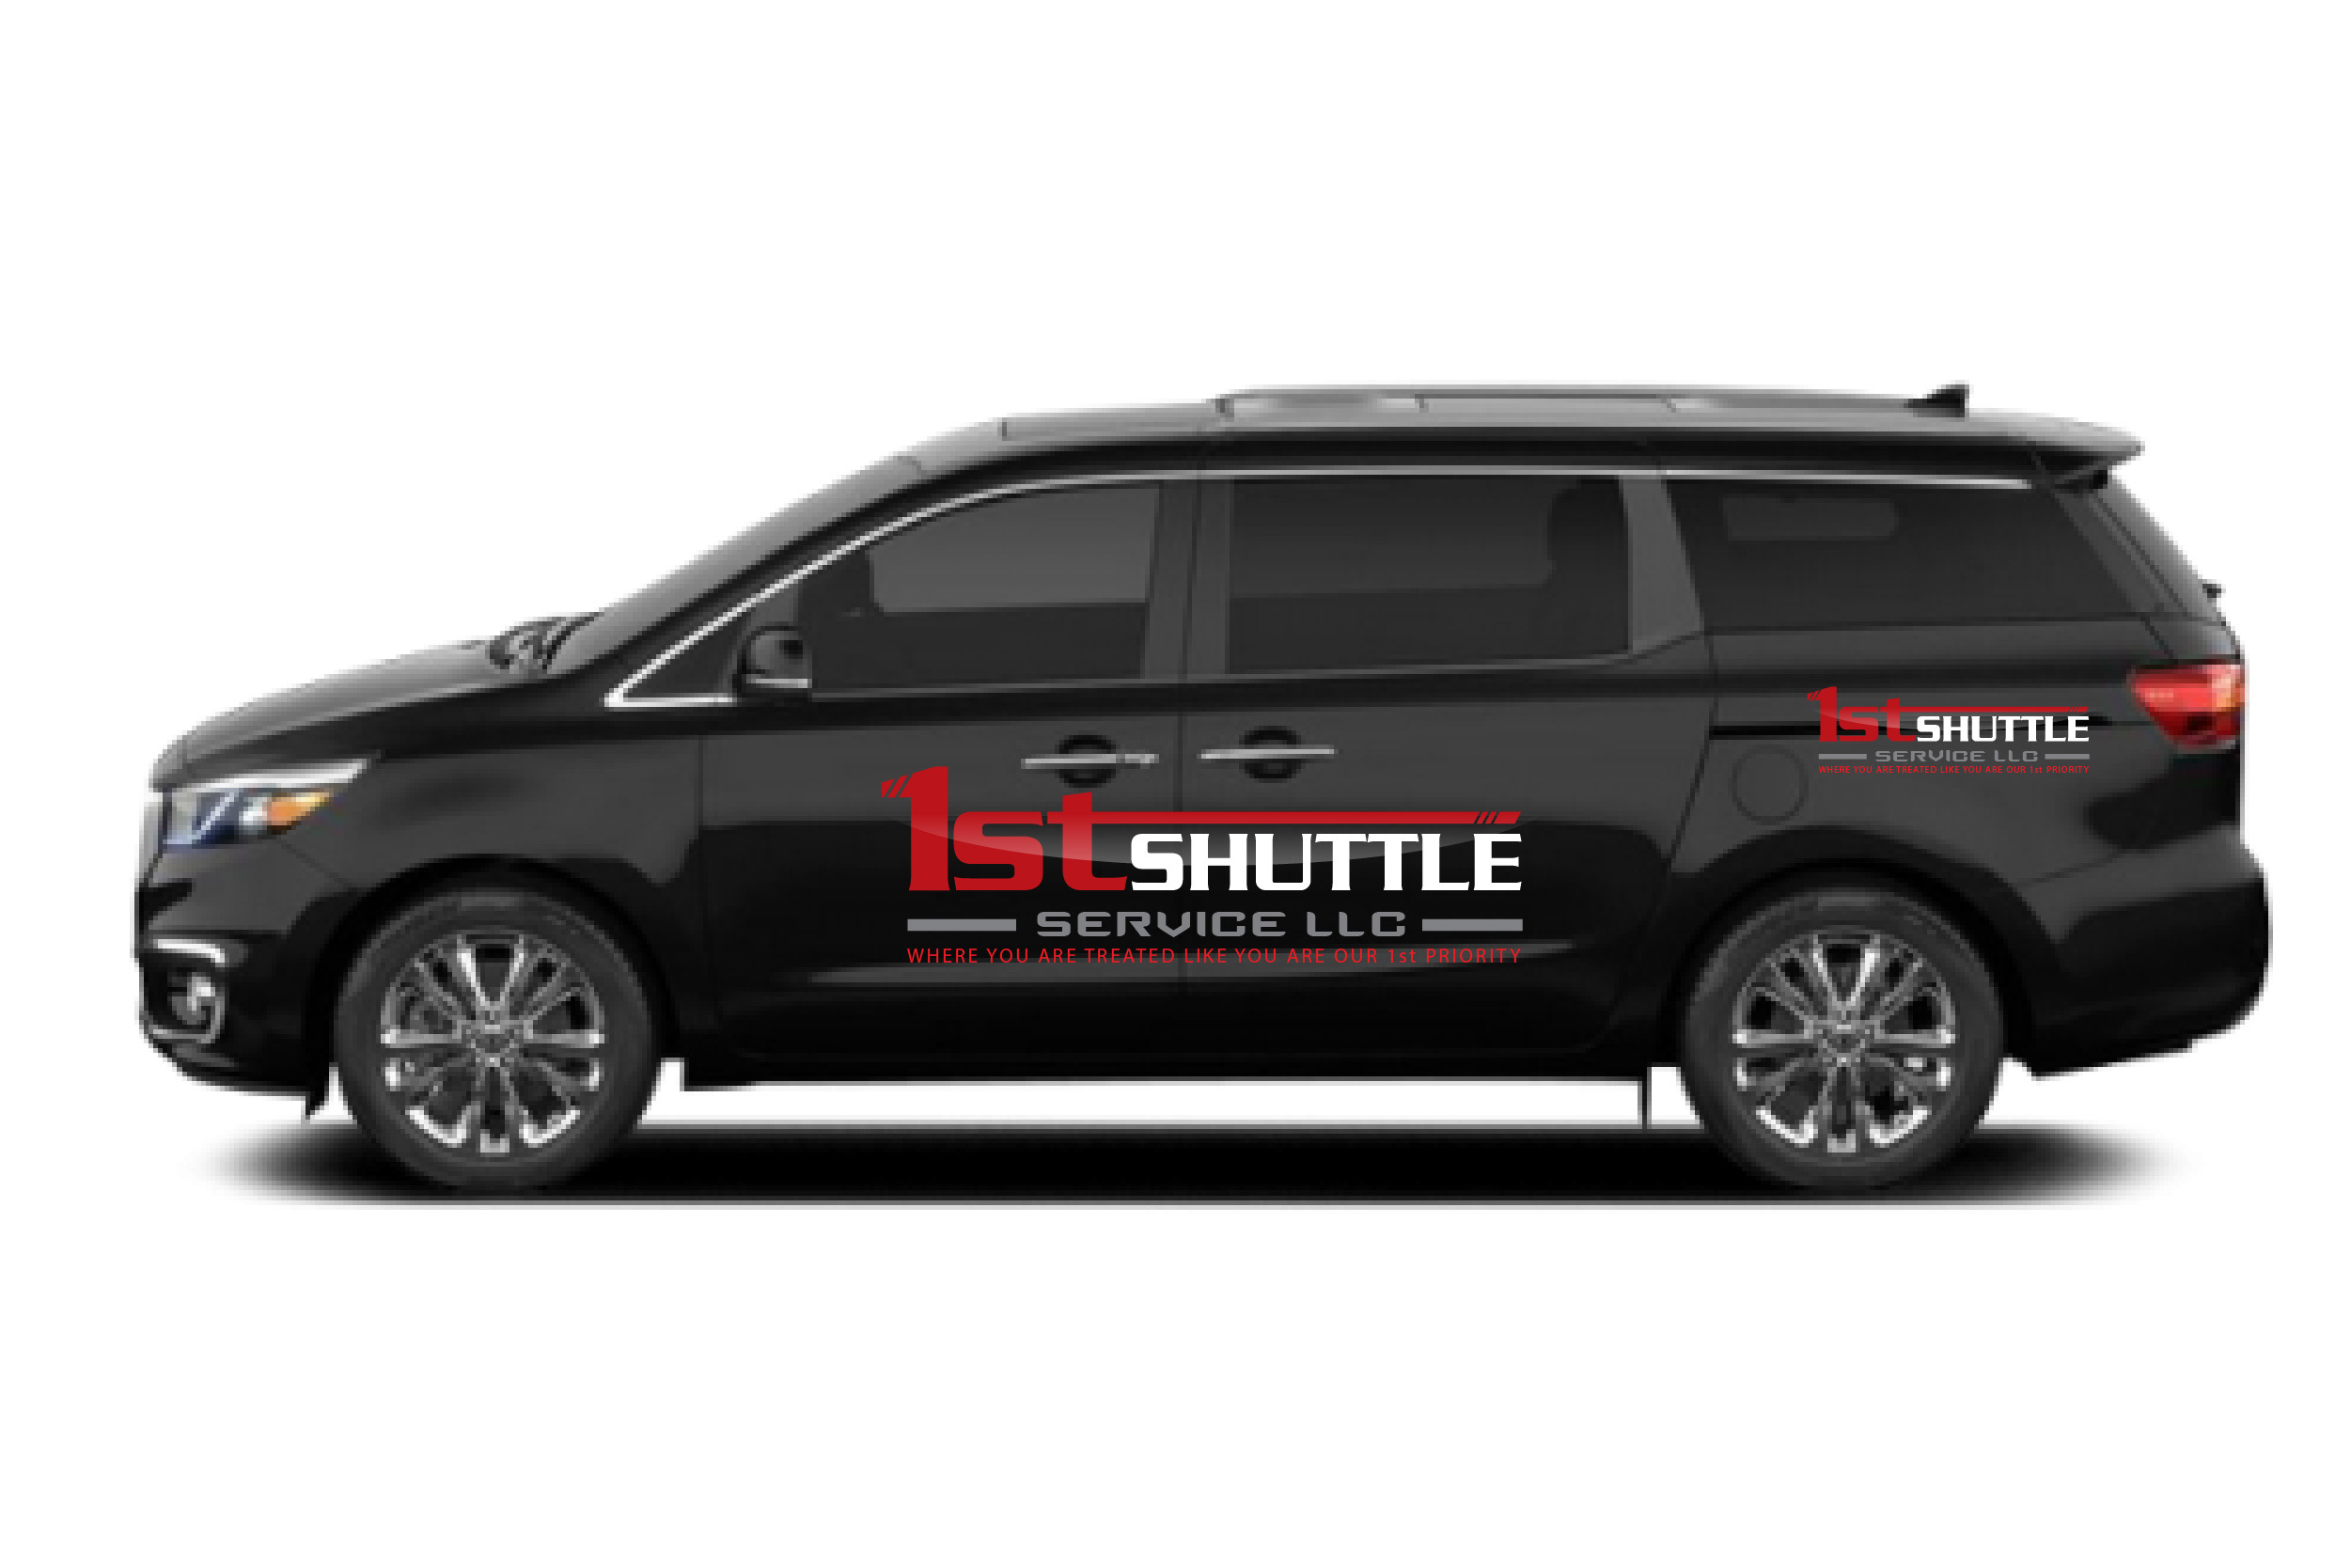 1st Shuttle Service LLC